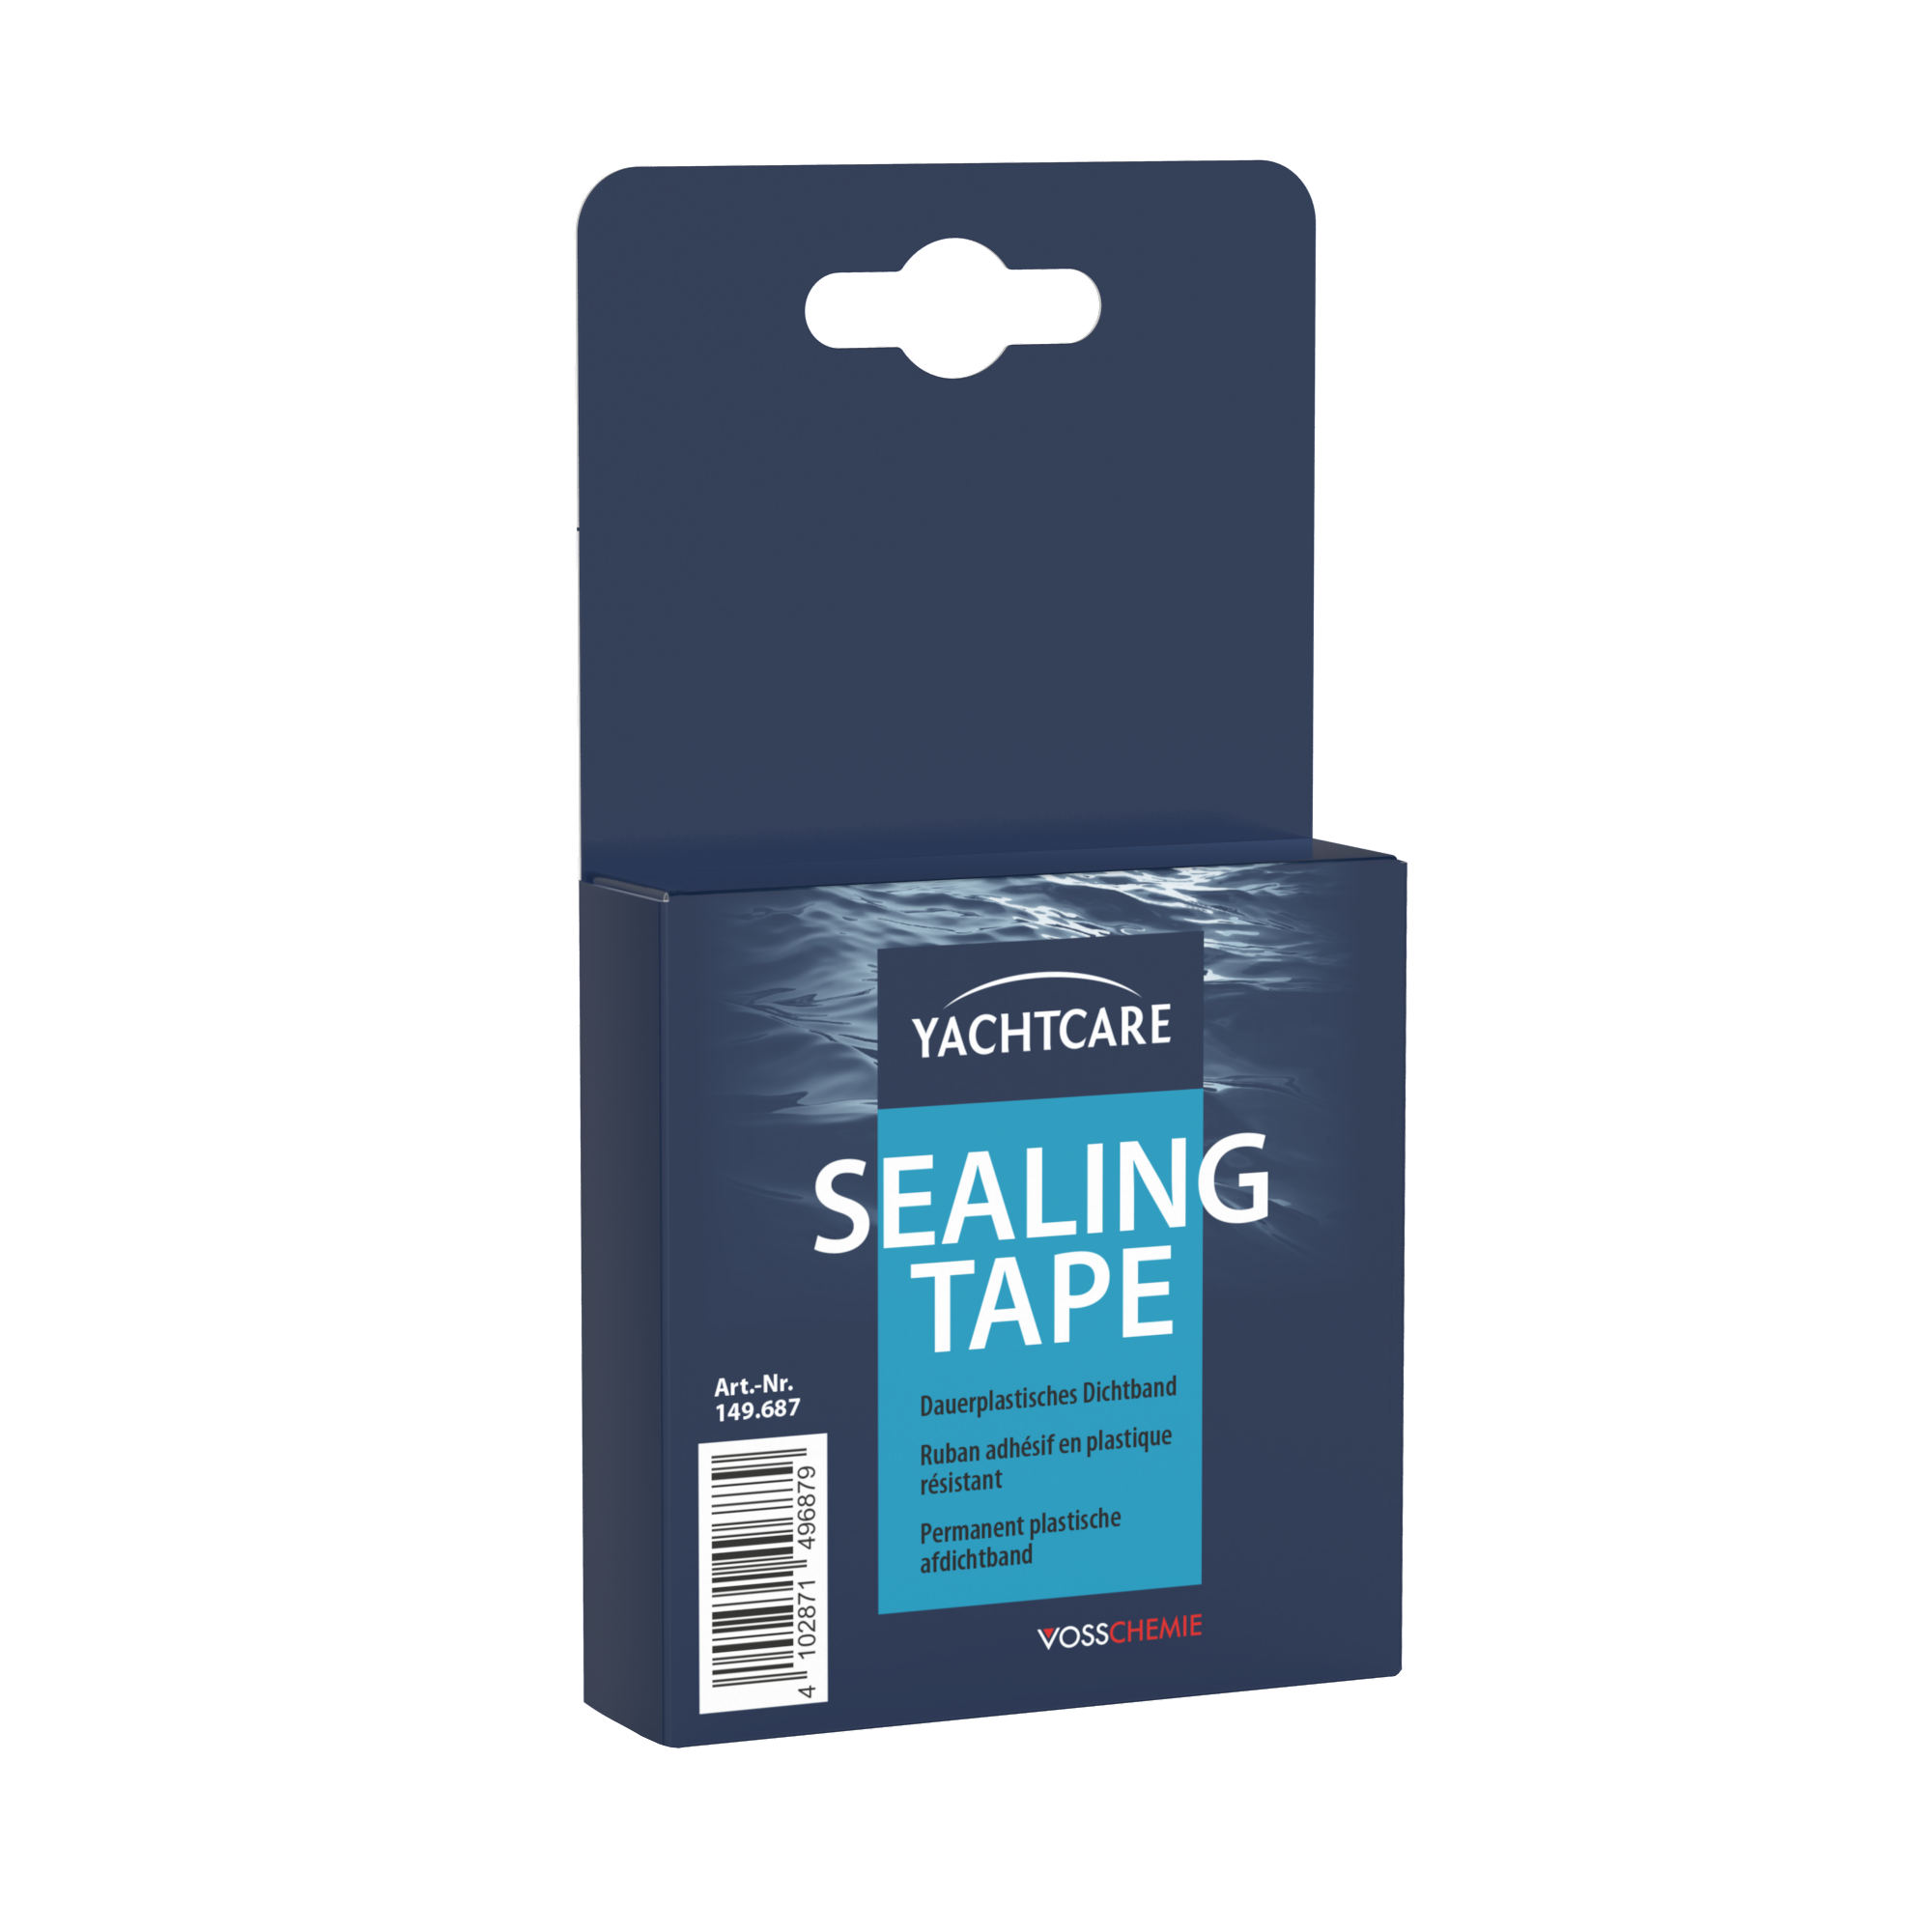 Dauerelastisches Abdichtband 'Sealing Tape' 18 mm x 3 m + product picture